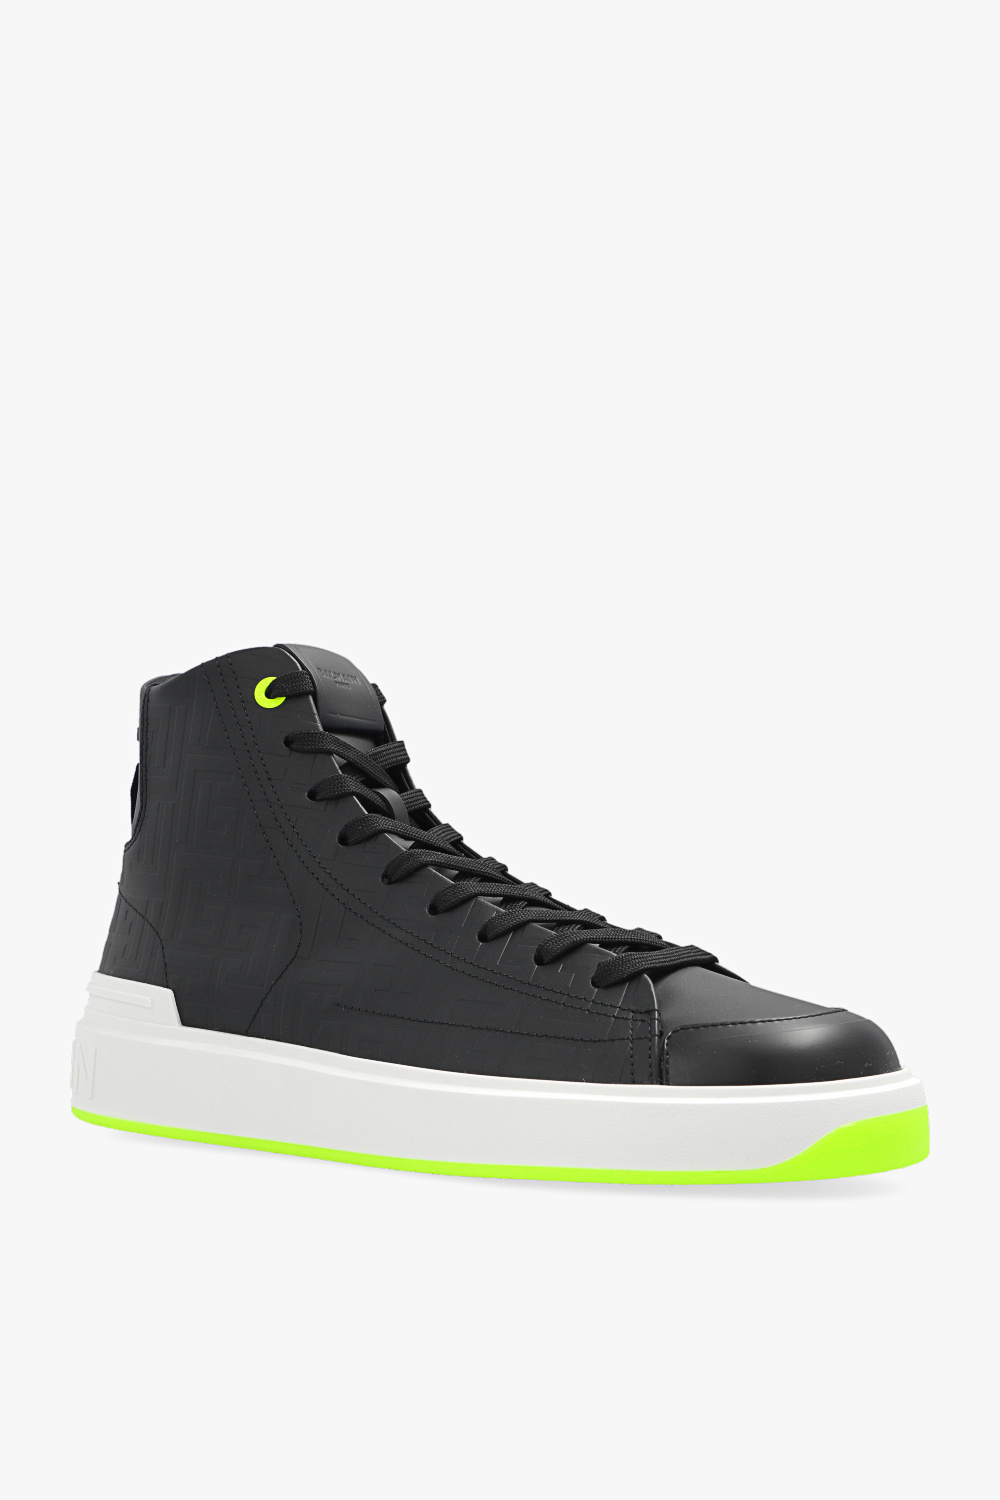 Balmain ‘B-Court’ insulated high-top sneakers